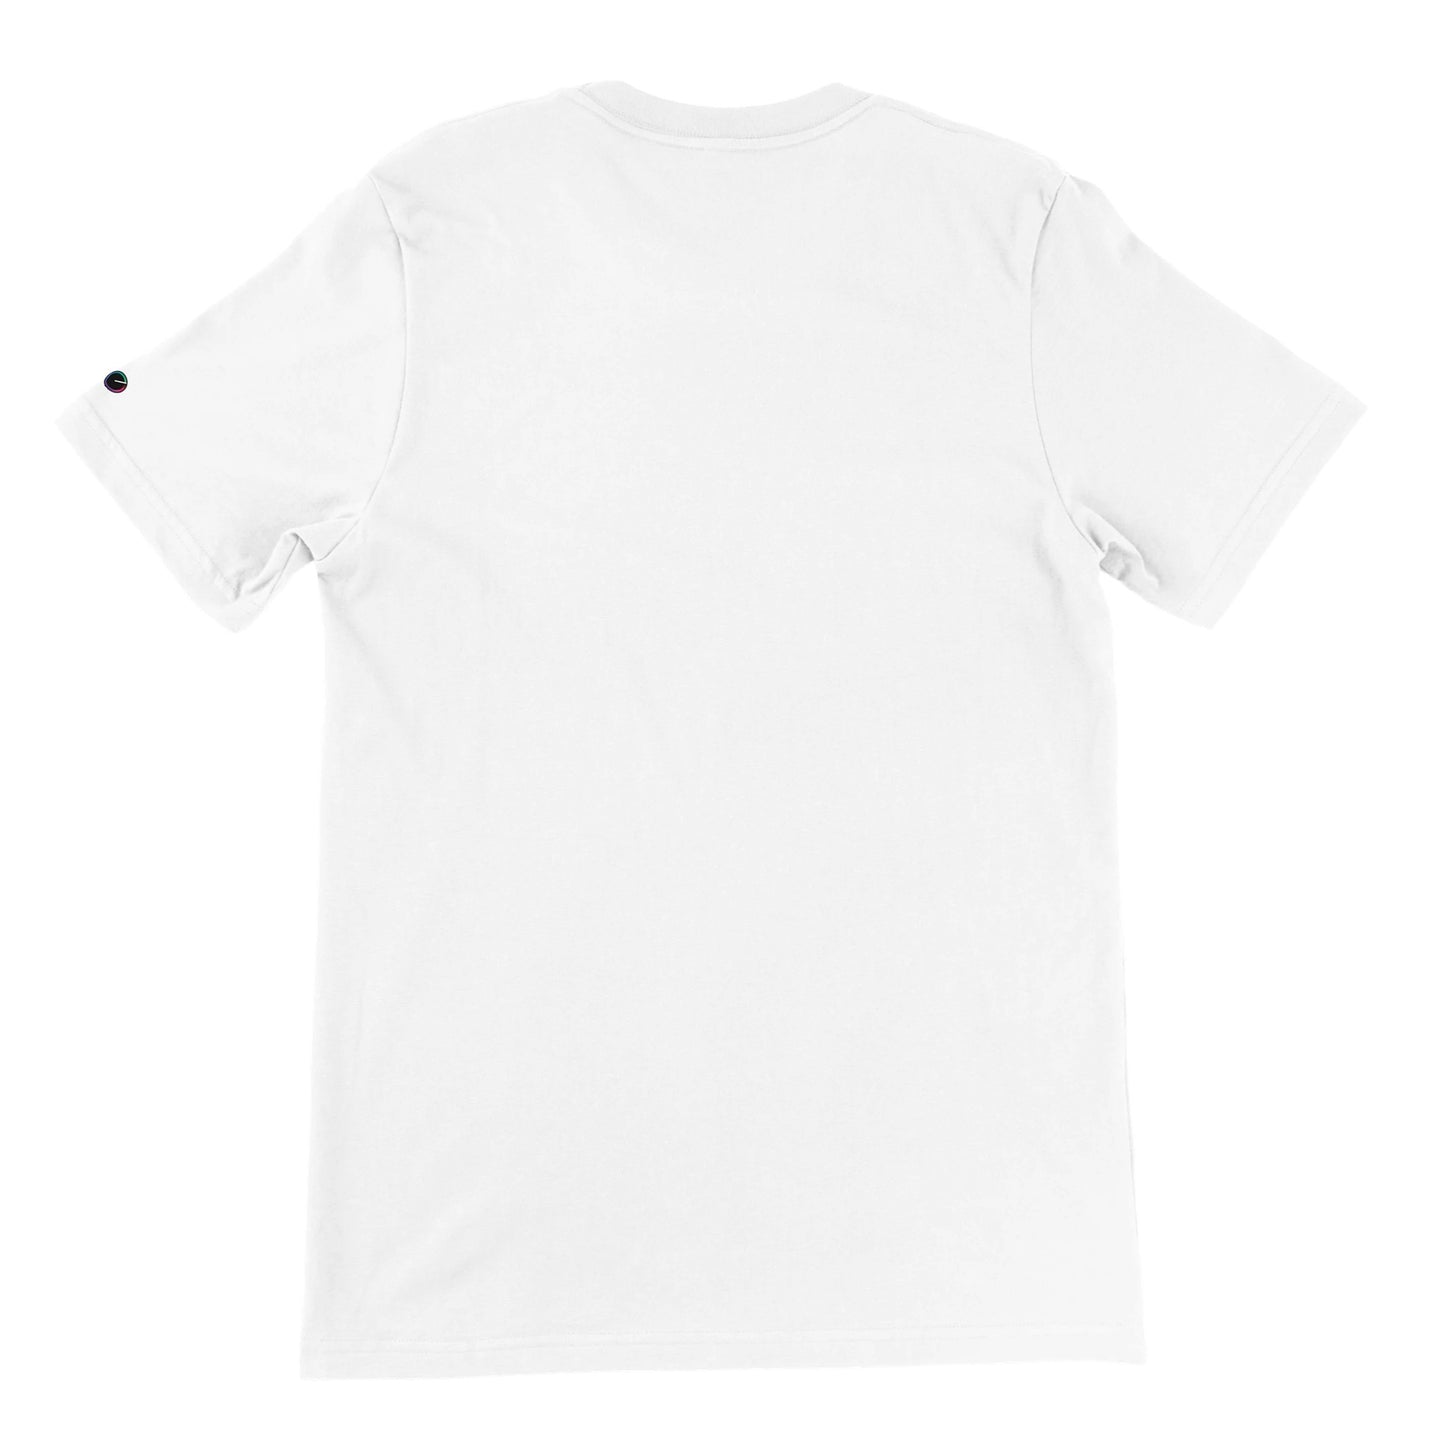 LOGO T-shirt #02